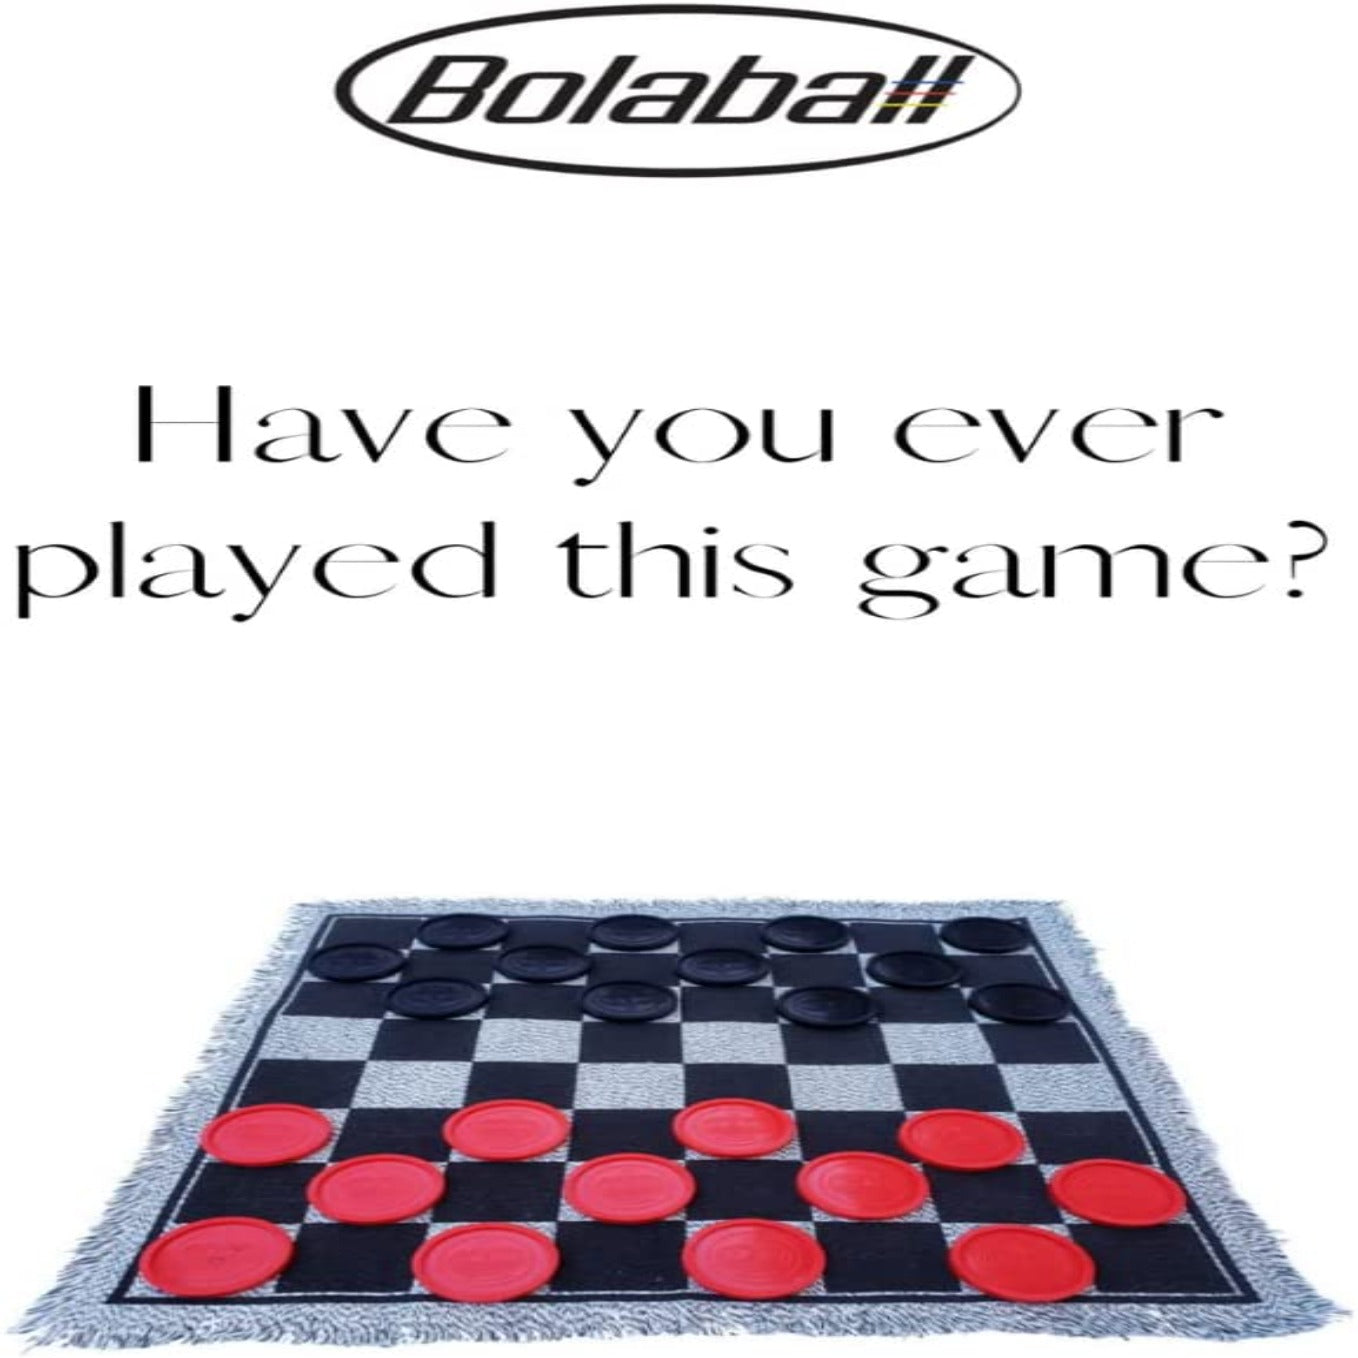 bolaball-giant-game-set-for-family